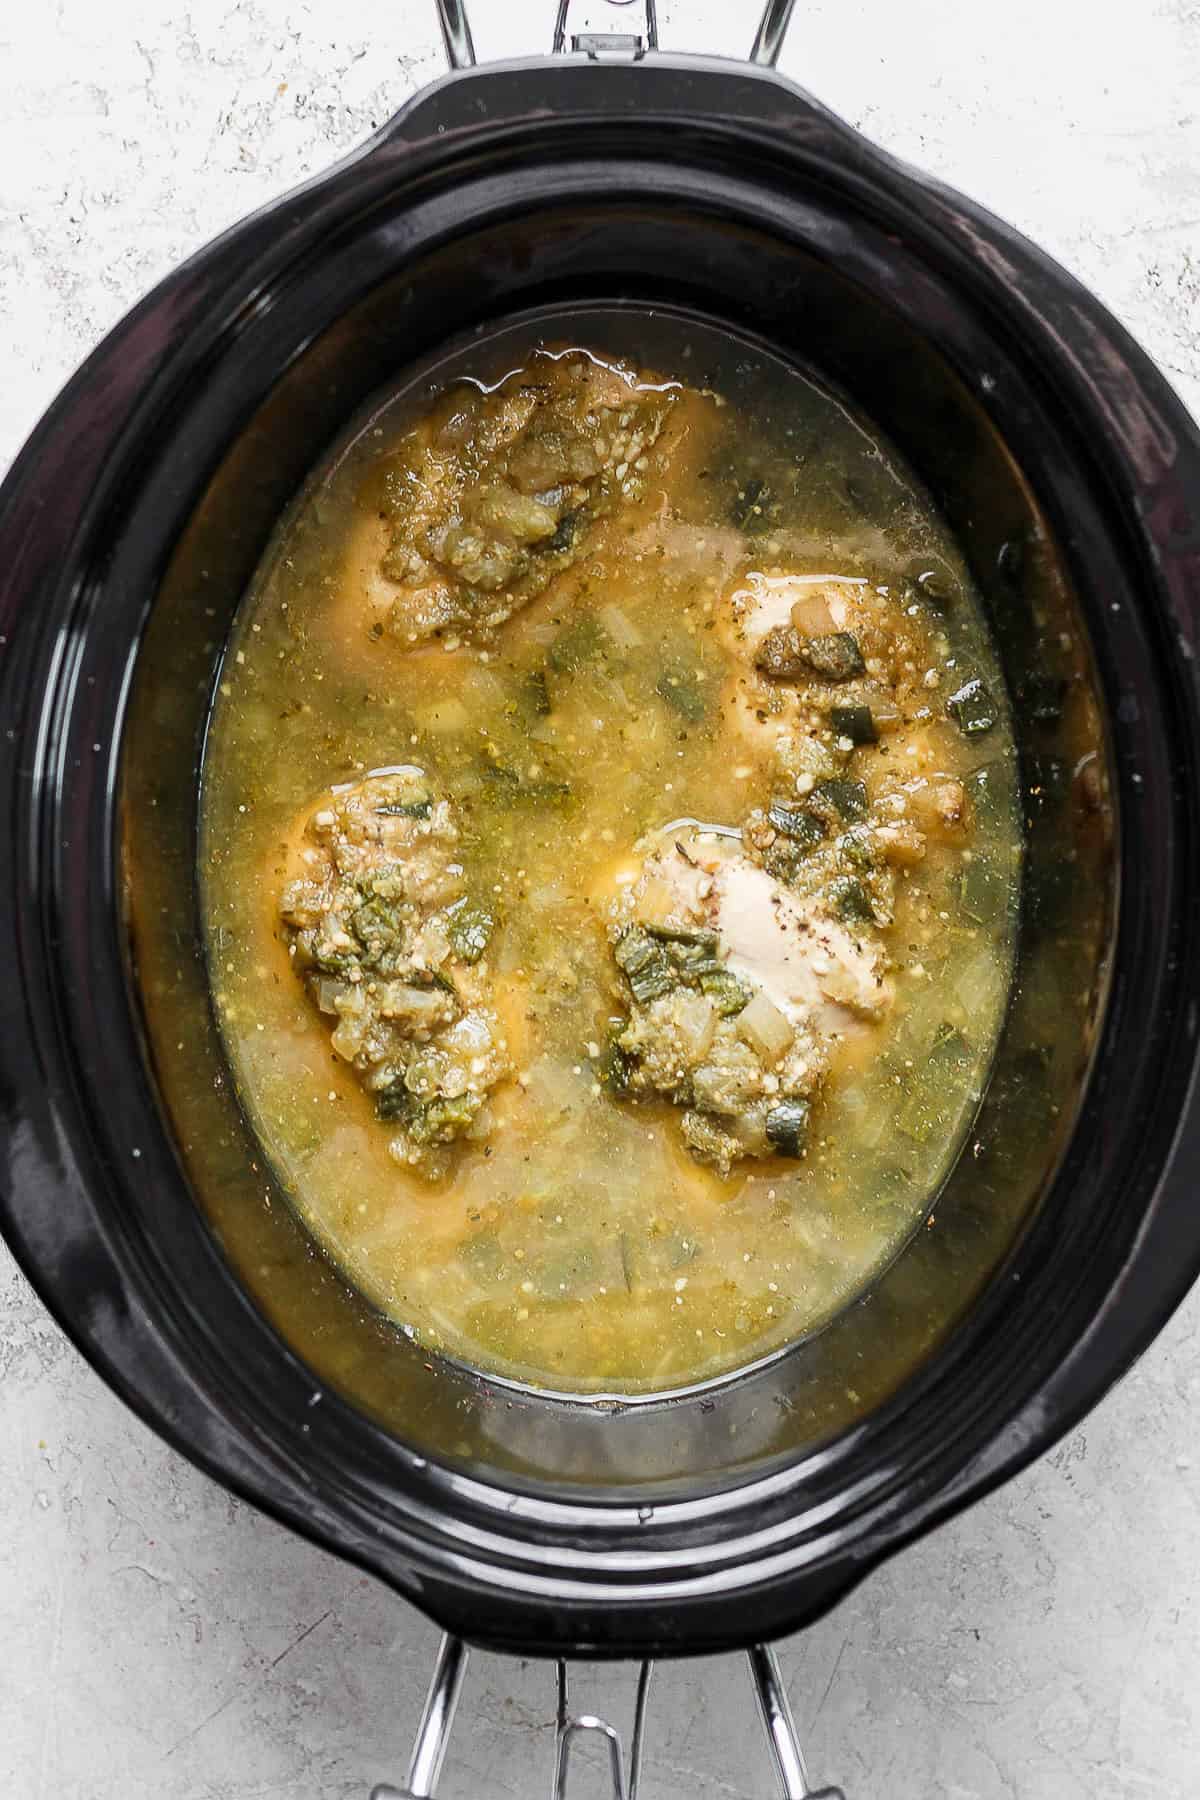 Cooked salsa verde chicken inside the crockpot